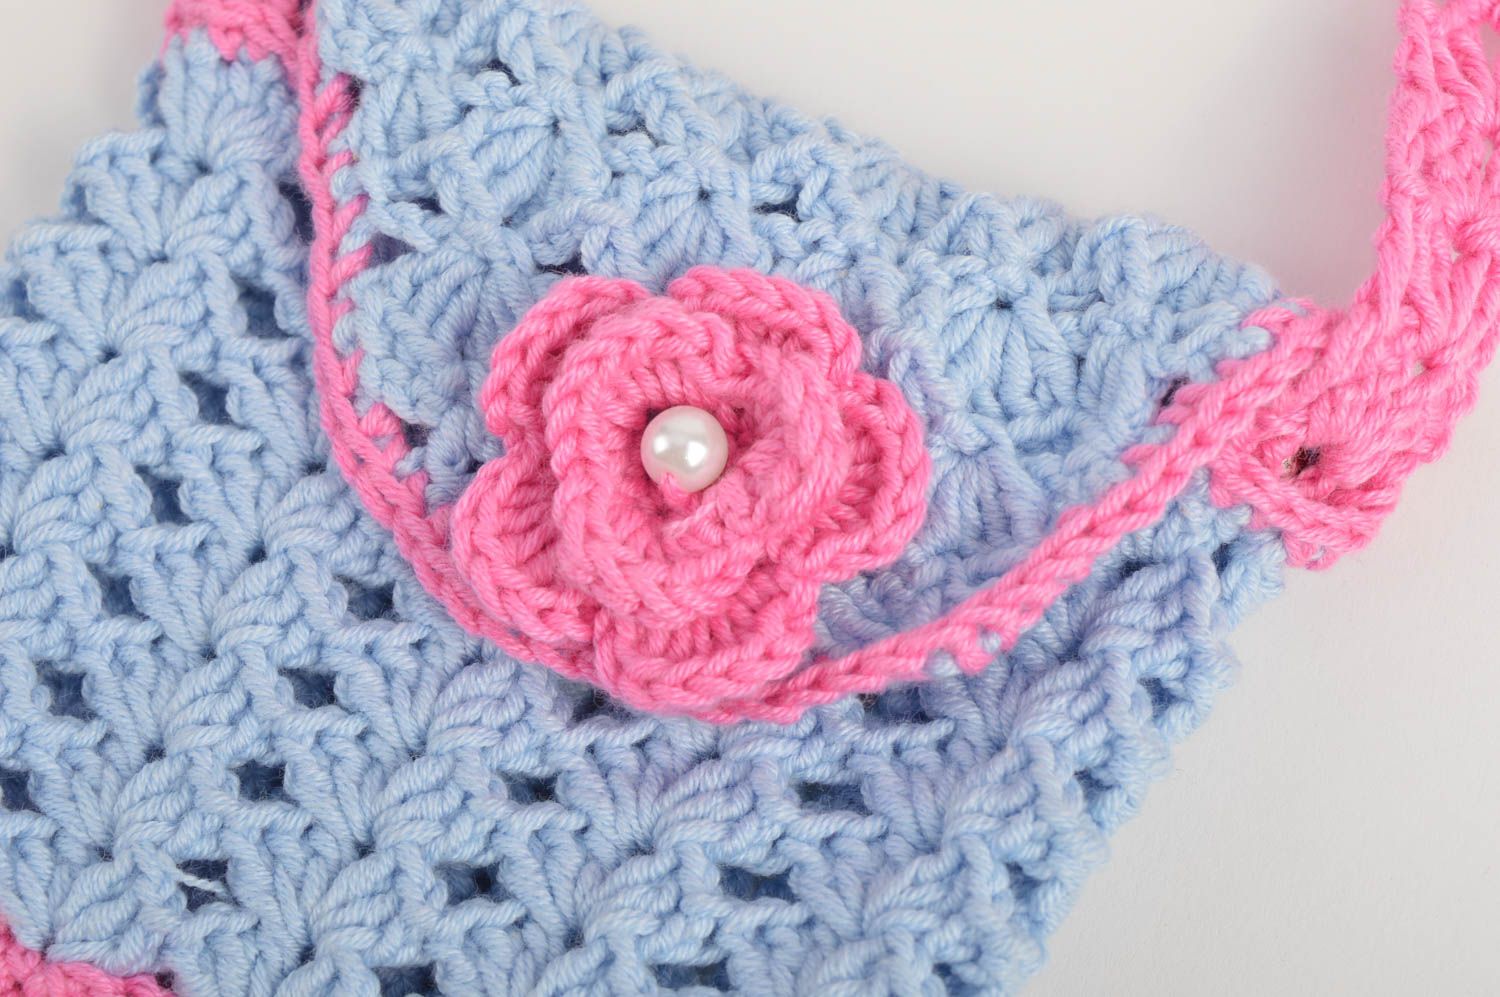 Elena Handbags Handmade Crochet Button Woven Crossbody Bag